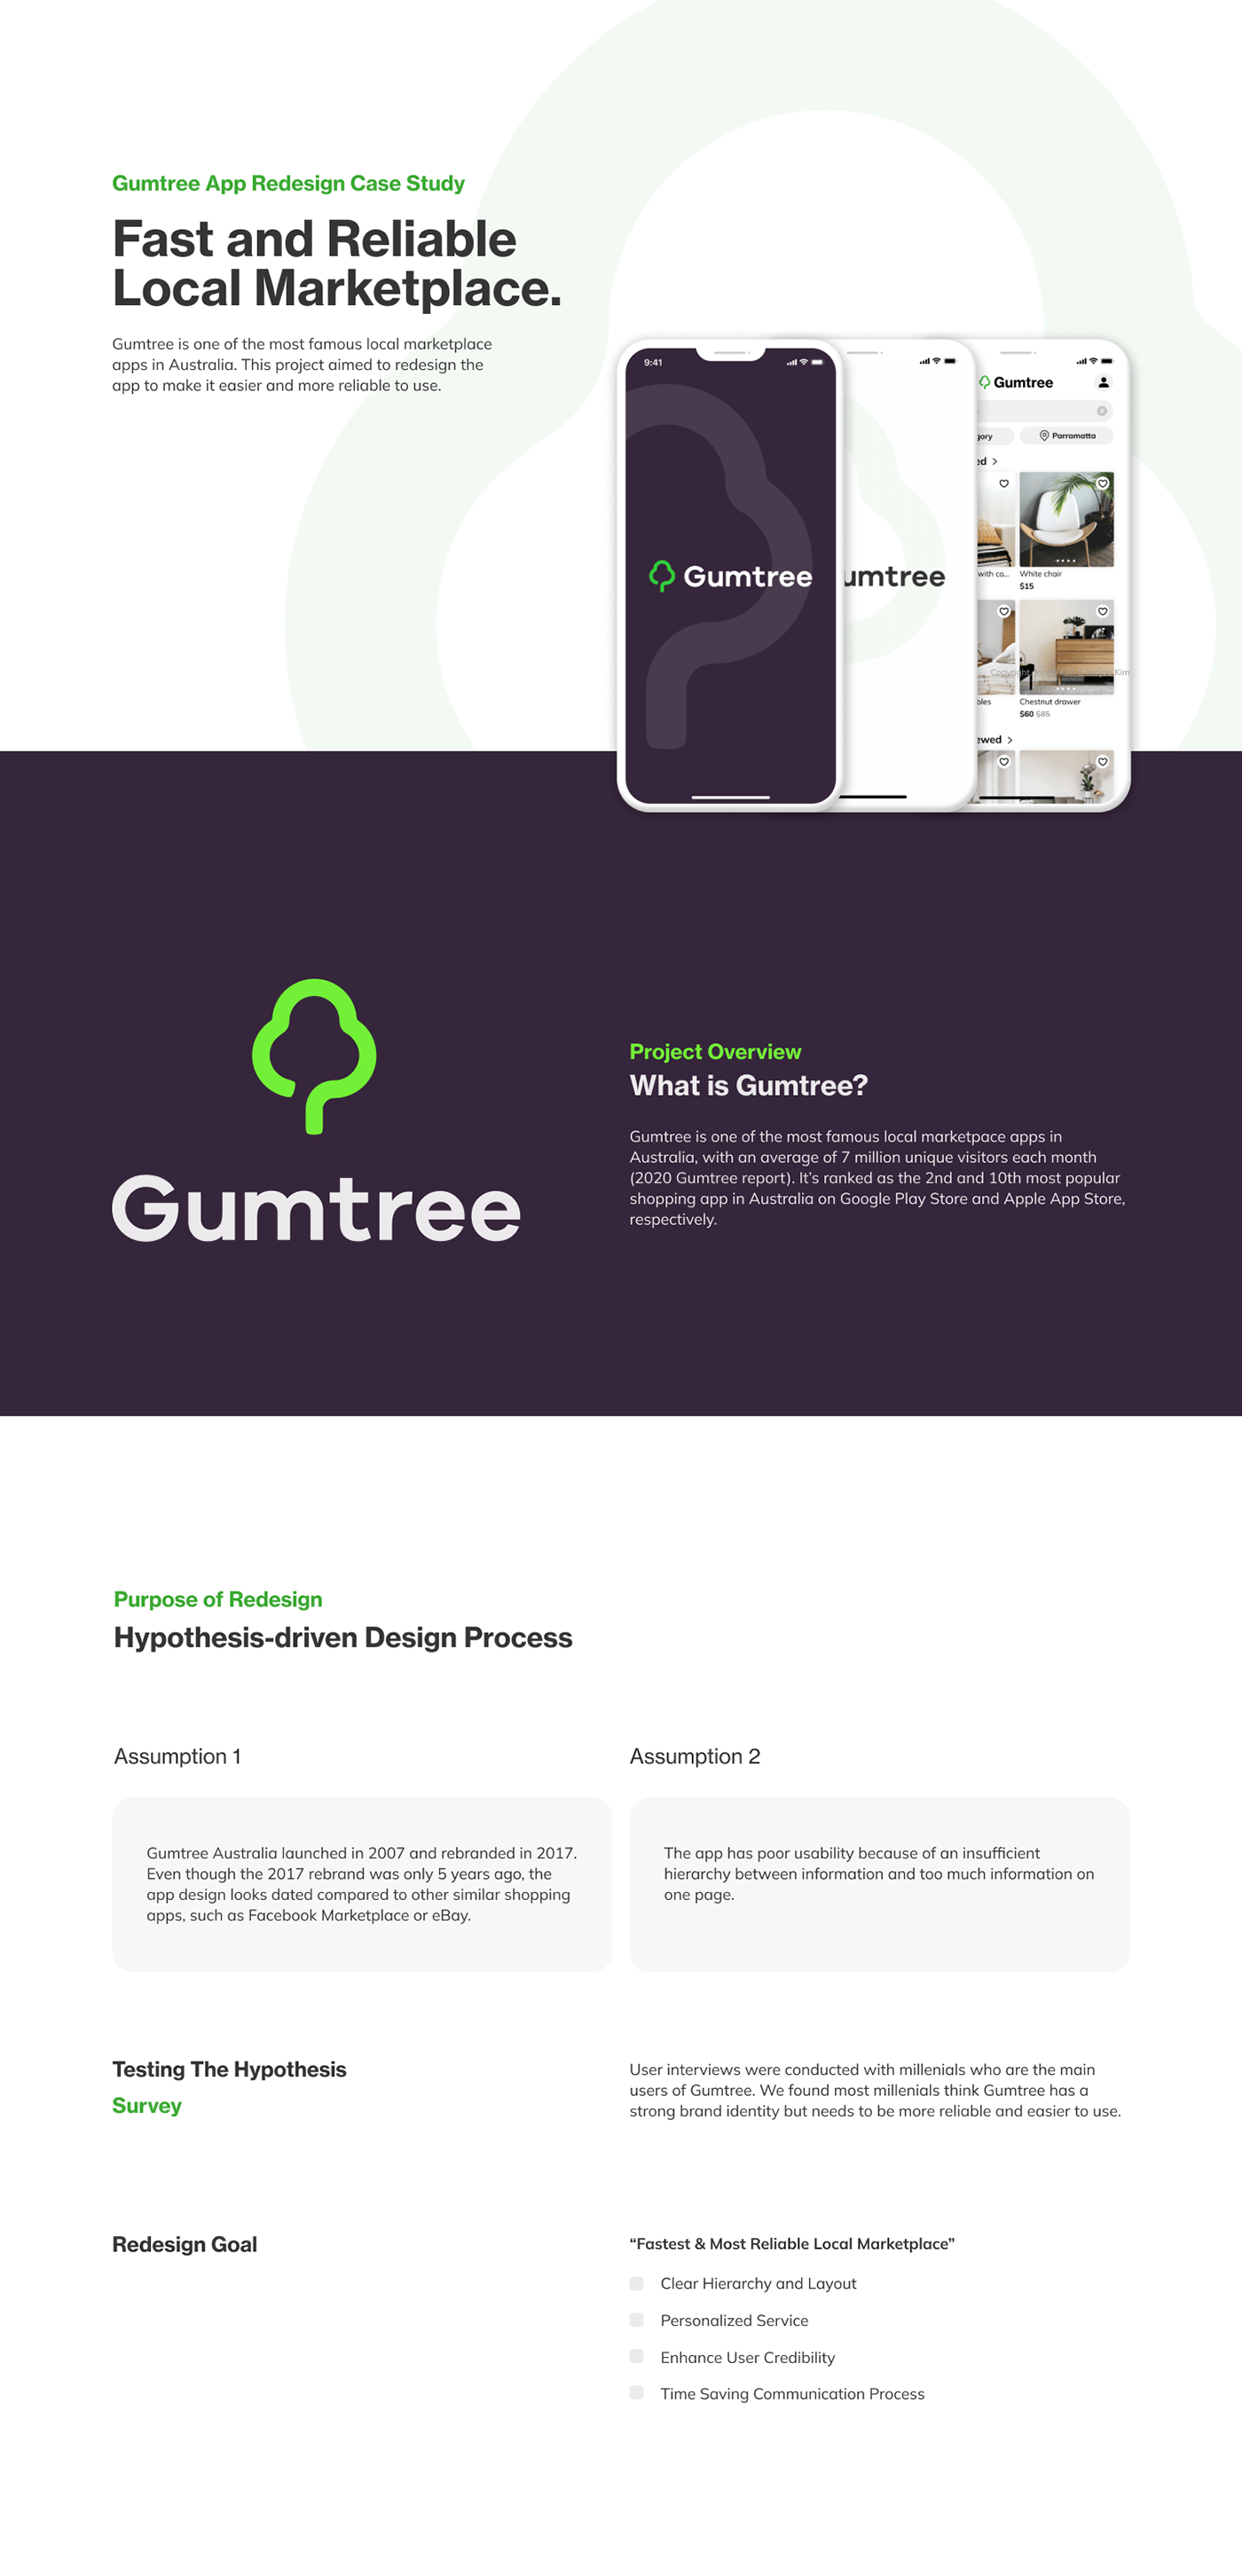 Gumtree mobile app redesign case study